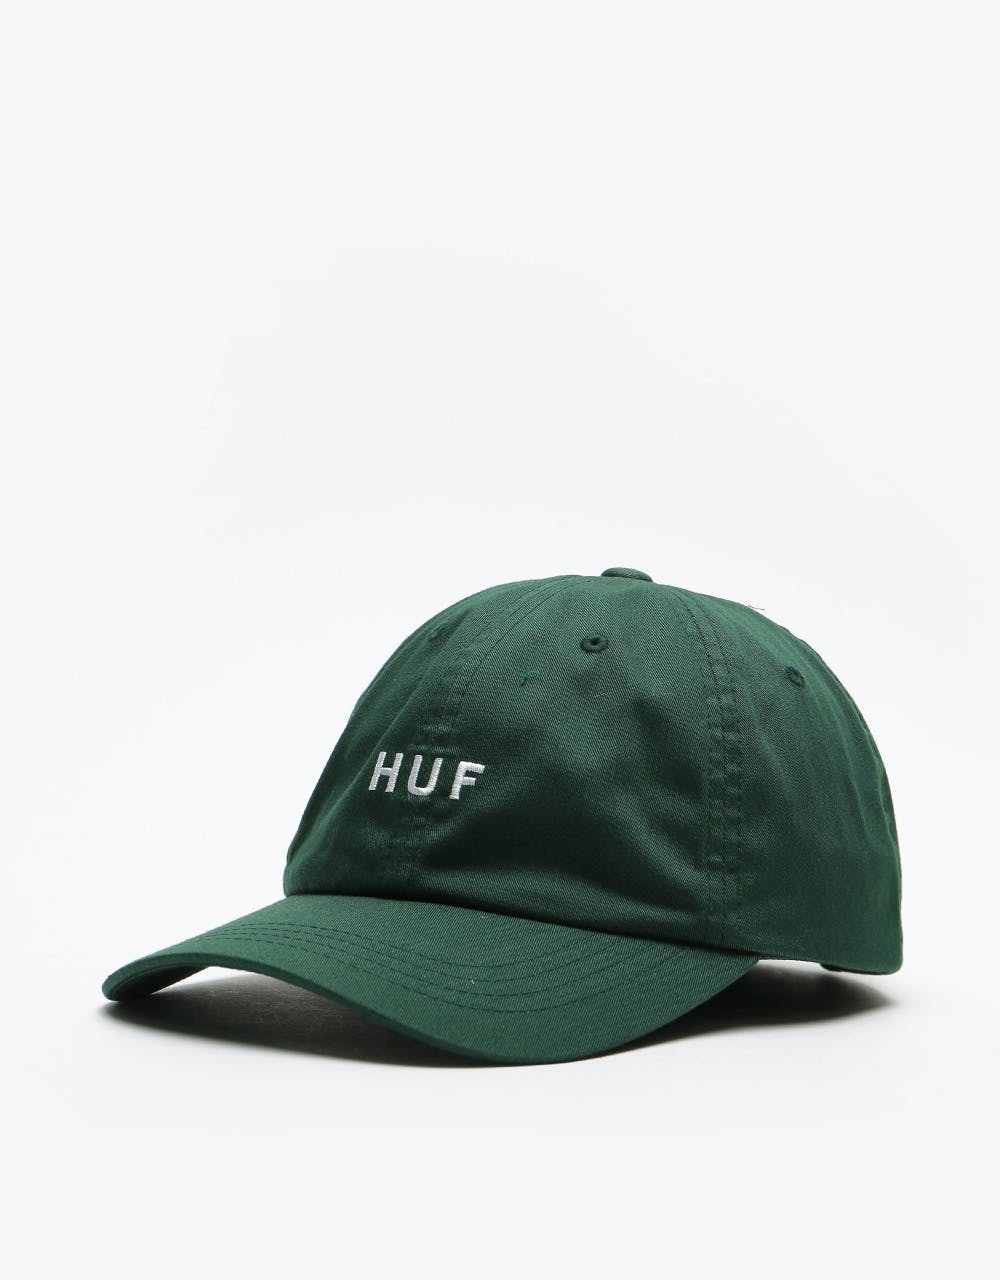 HUF OG Logo Cap - Sycamore